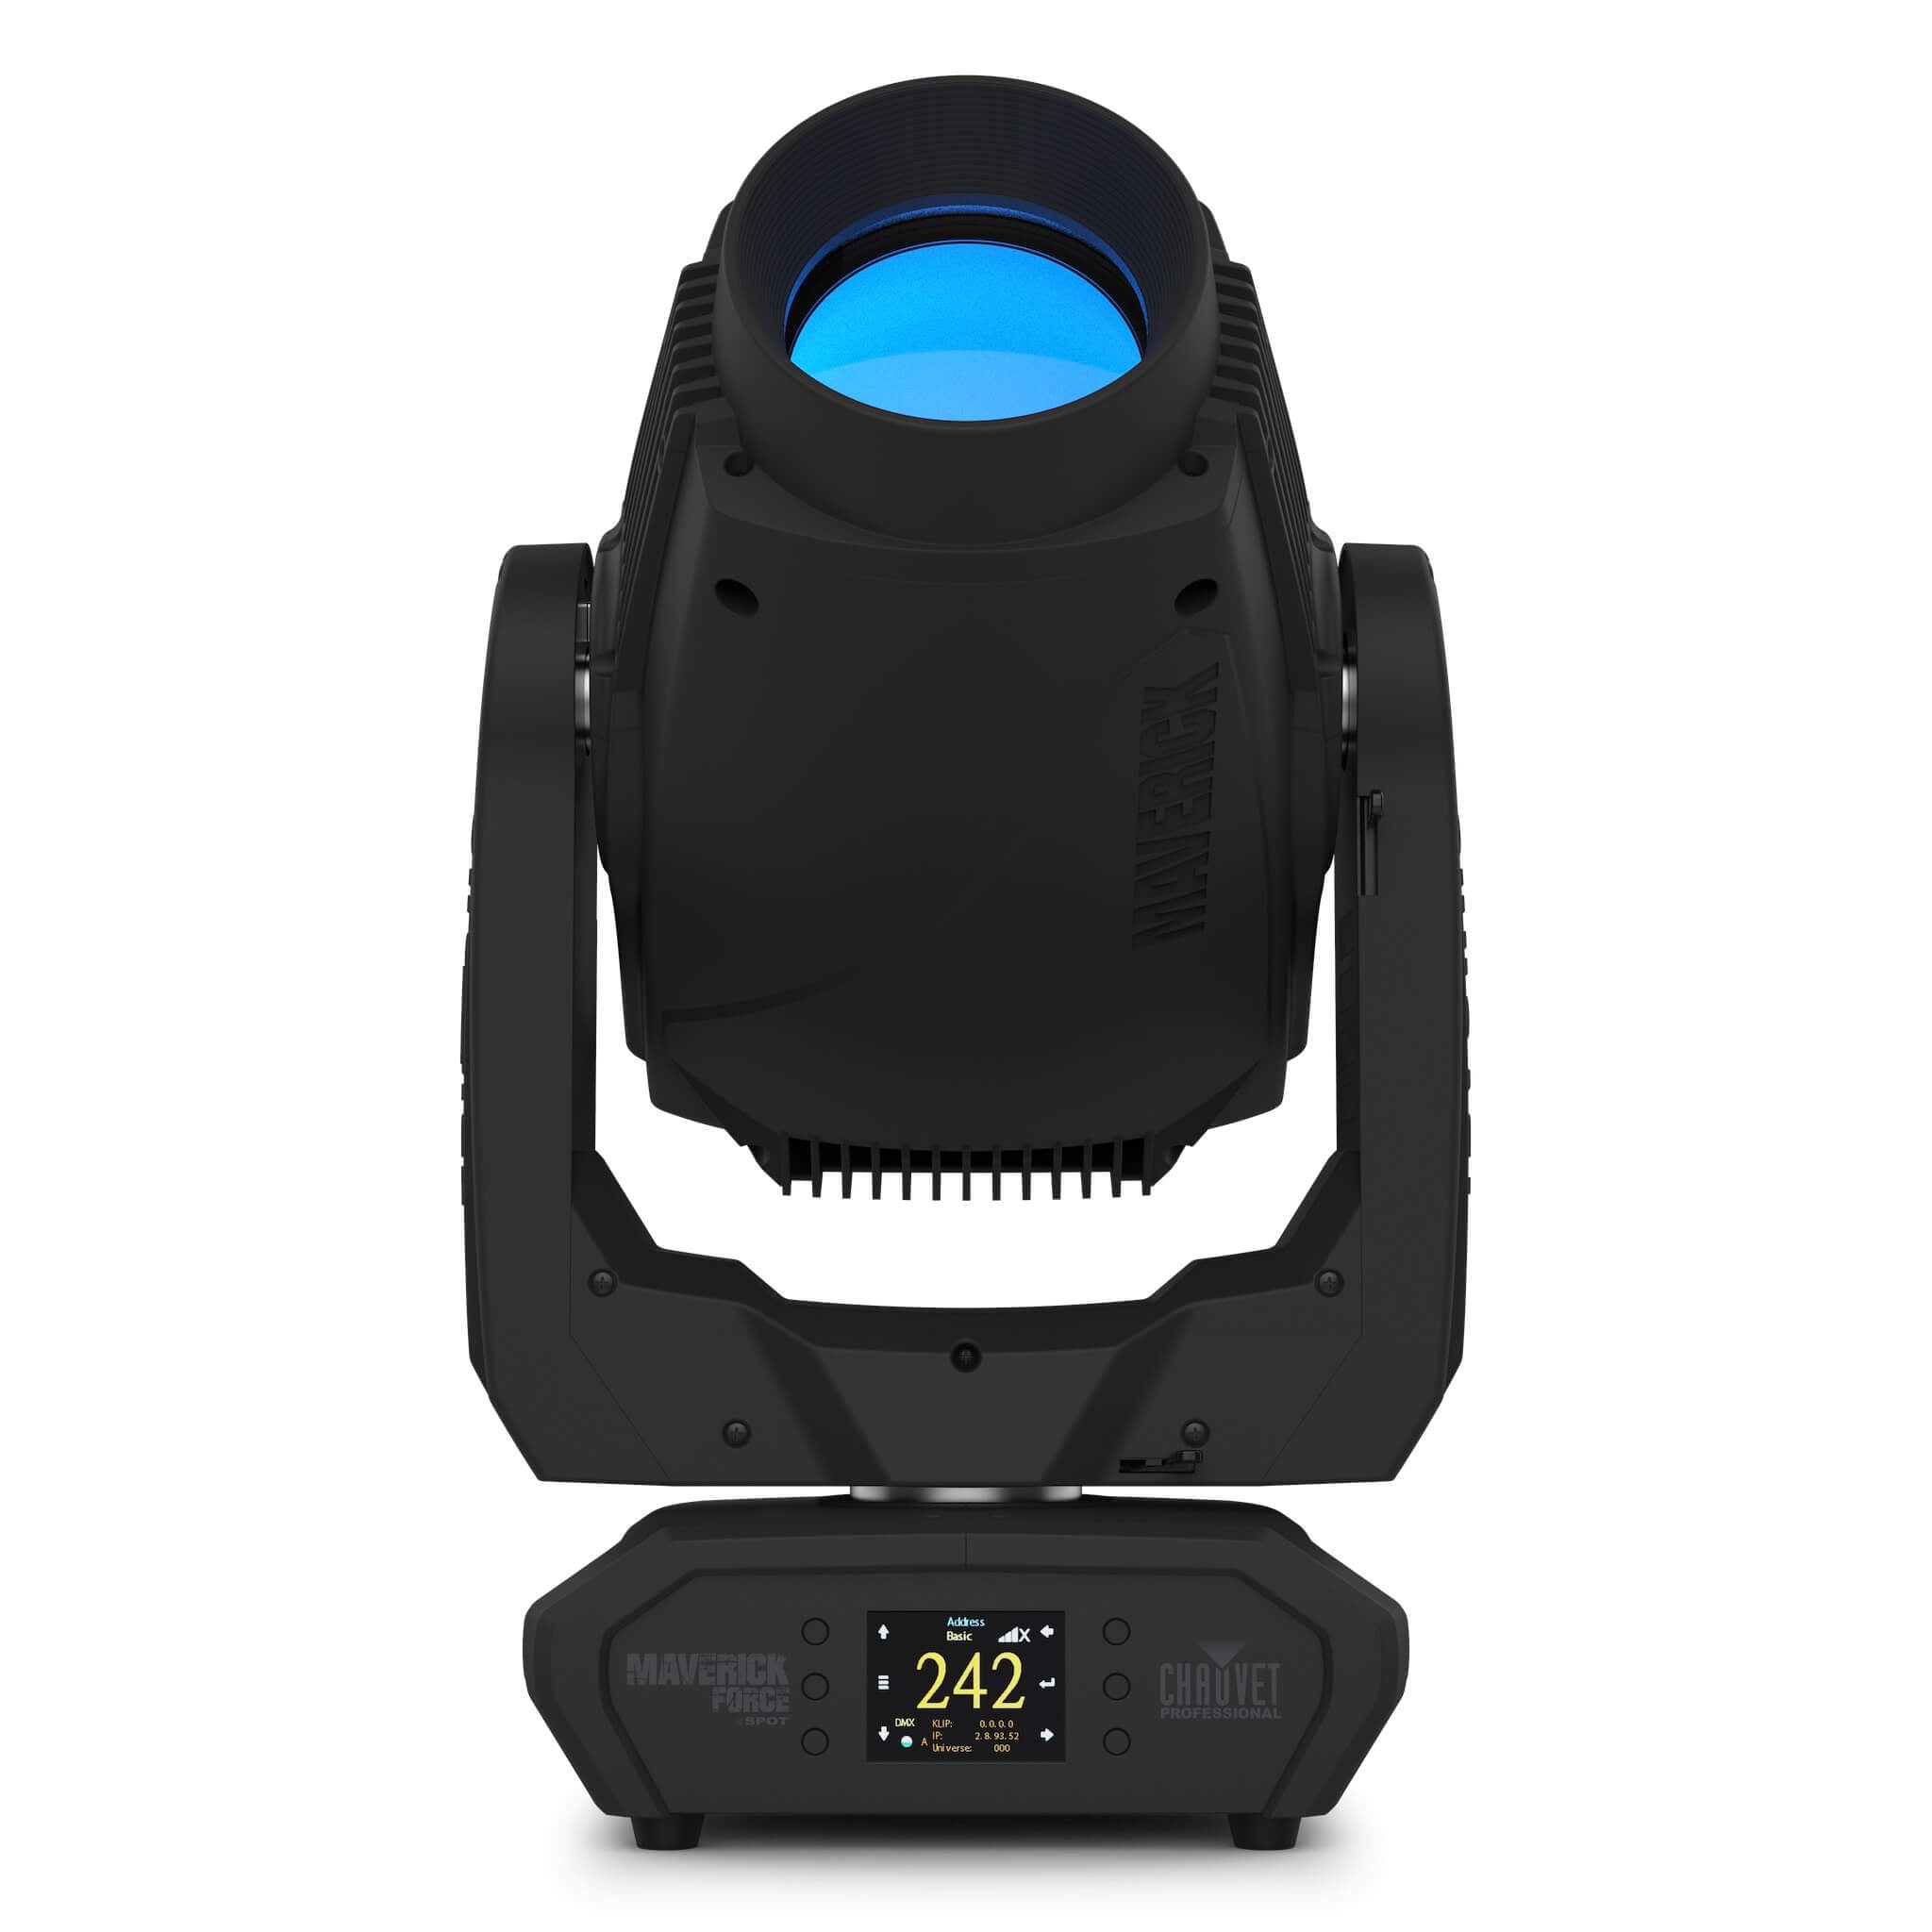 Chauvet Professional Maverick Force S Spot - LED Moving Head Light, front